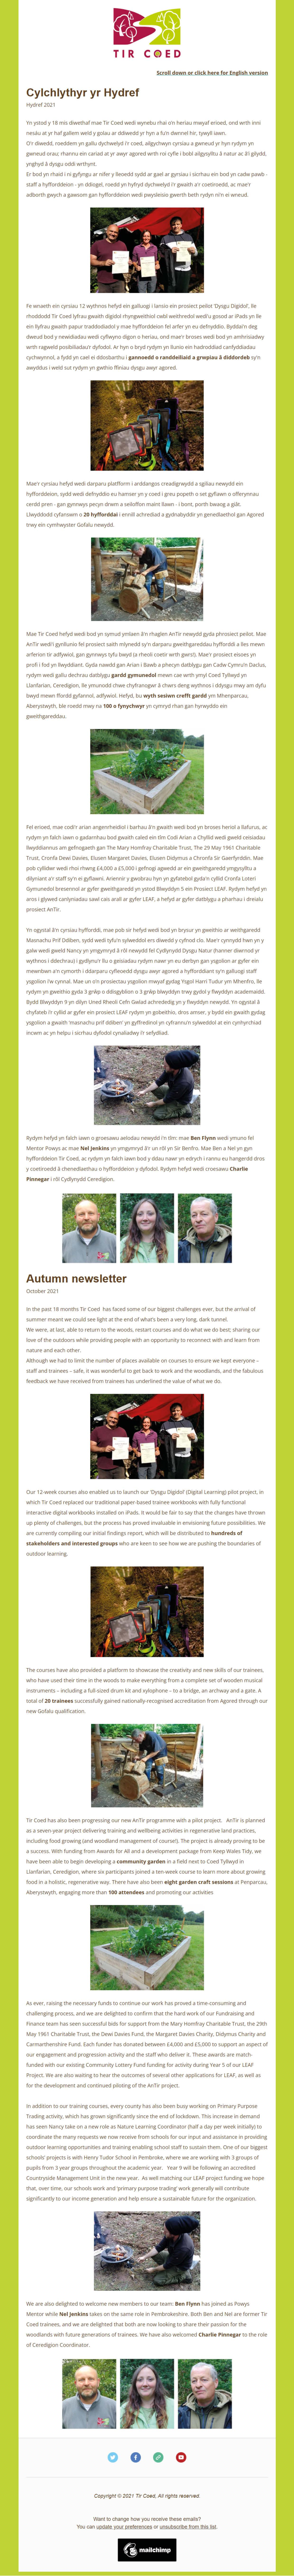 Cylchlythyr Hydref Tir Coed Autumn Newsletter